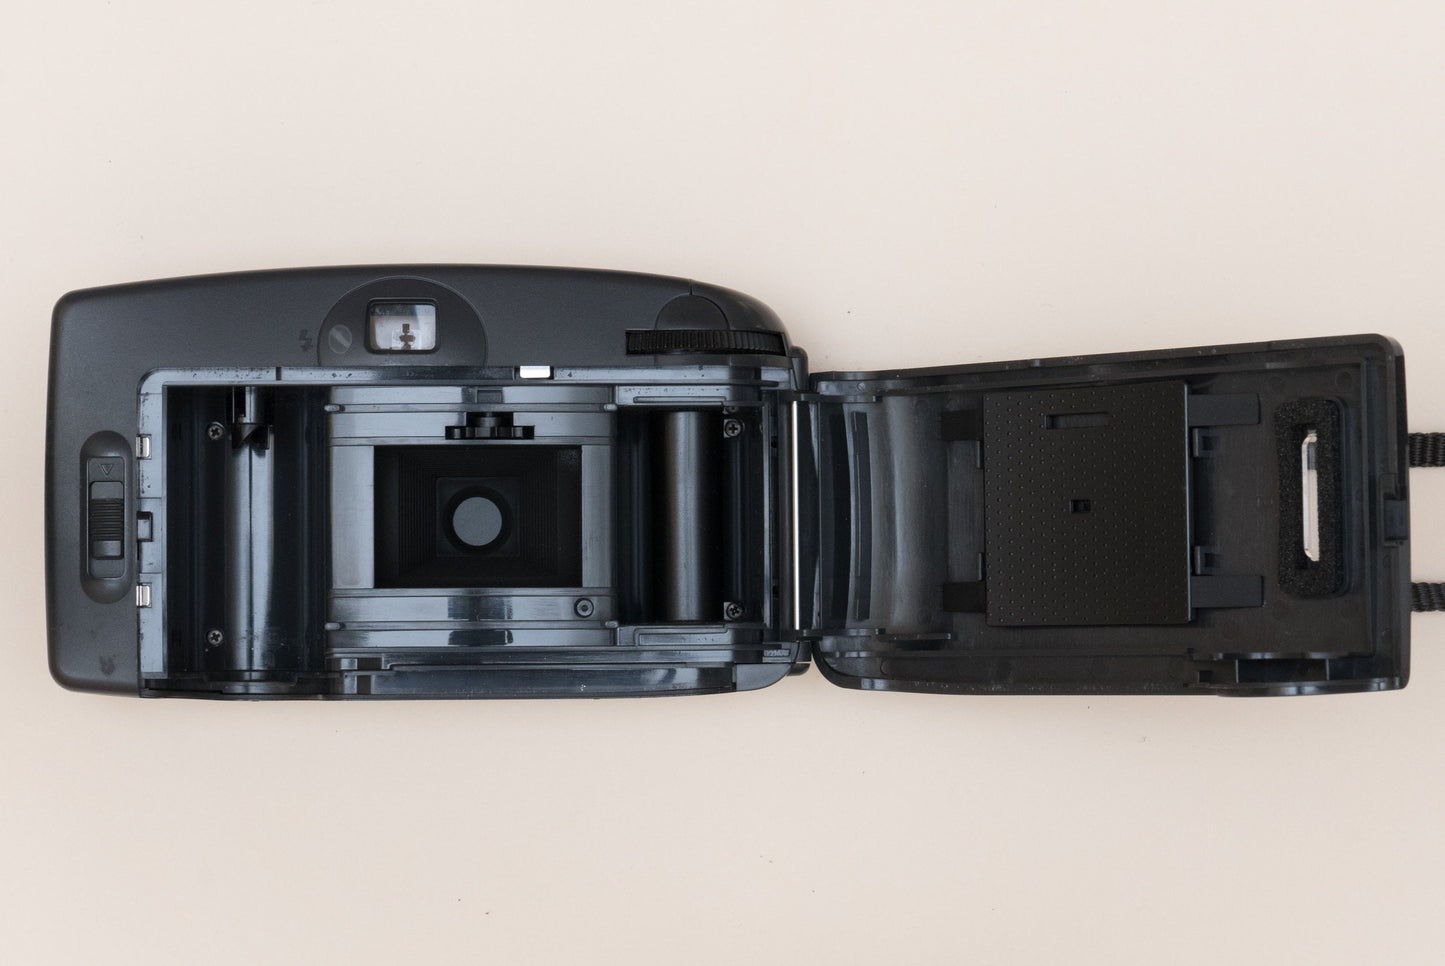 Fujifilm FZ-5 Fujinon Compact 35mm Point and Shoot Film Camera